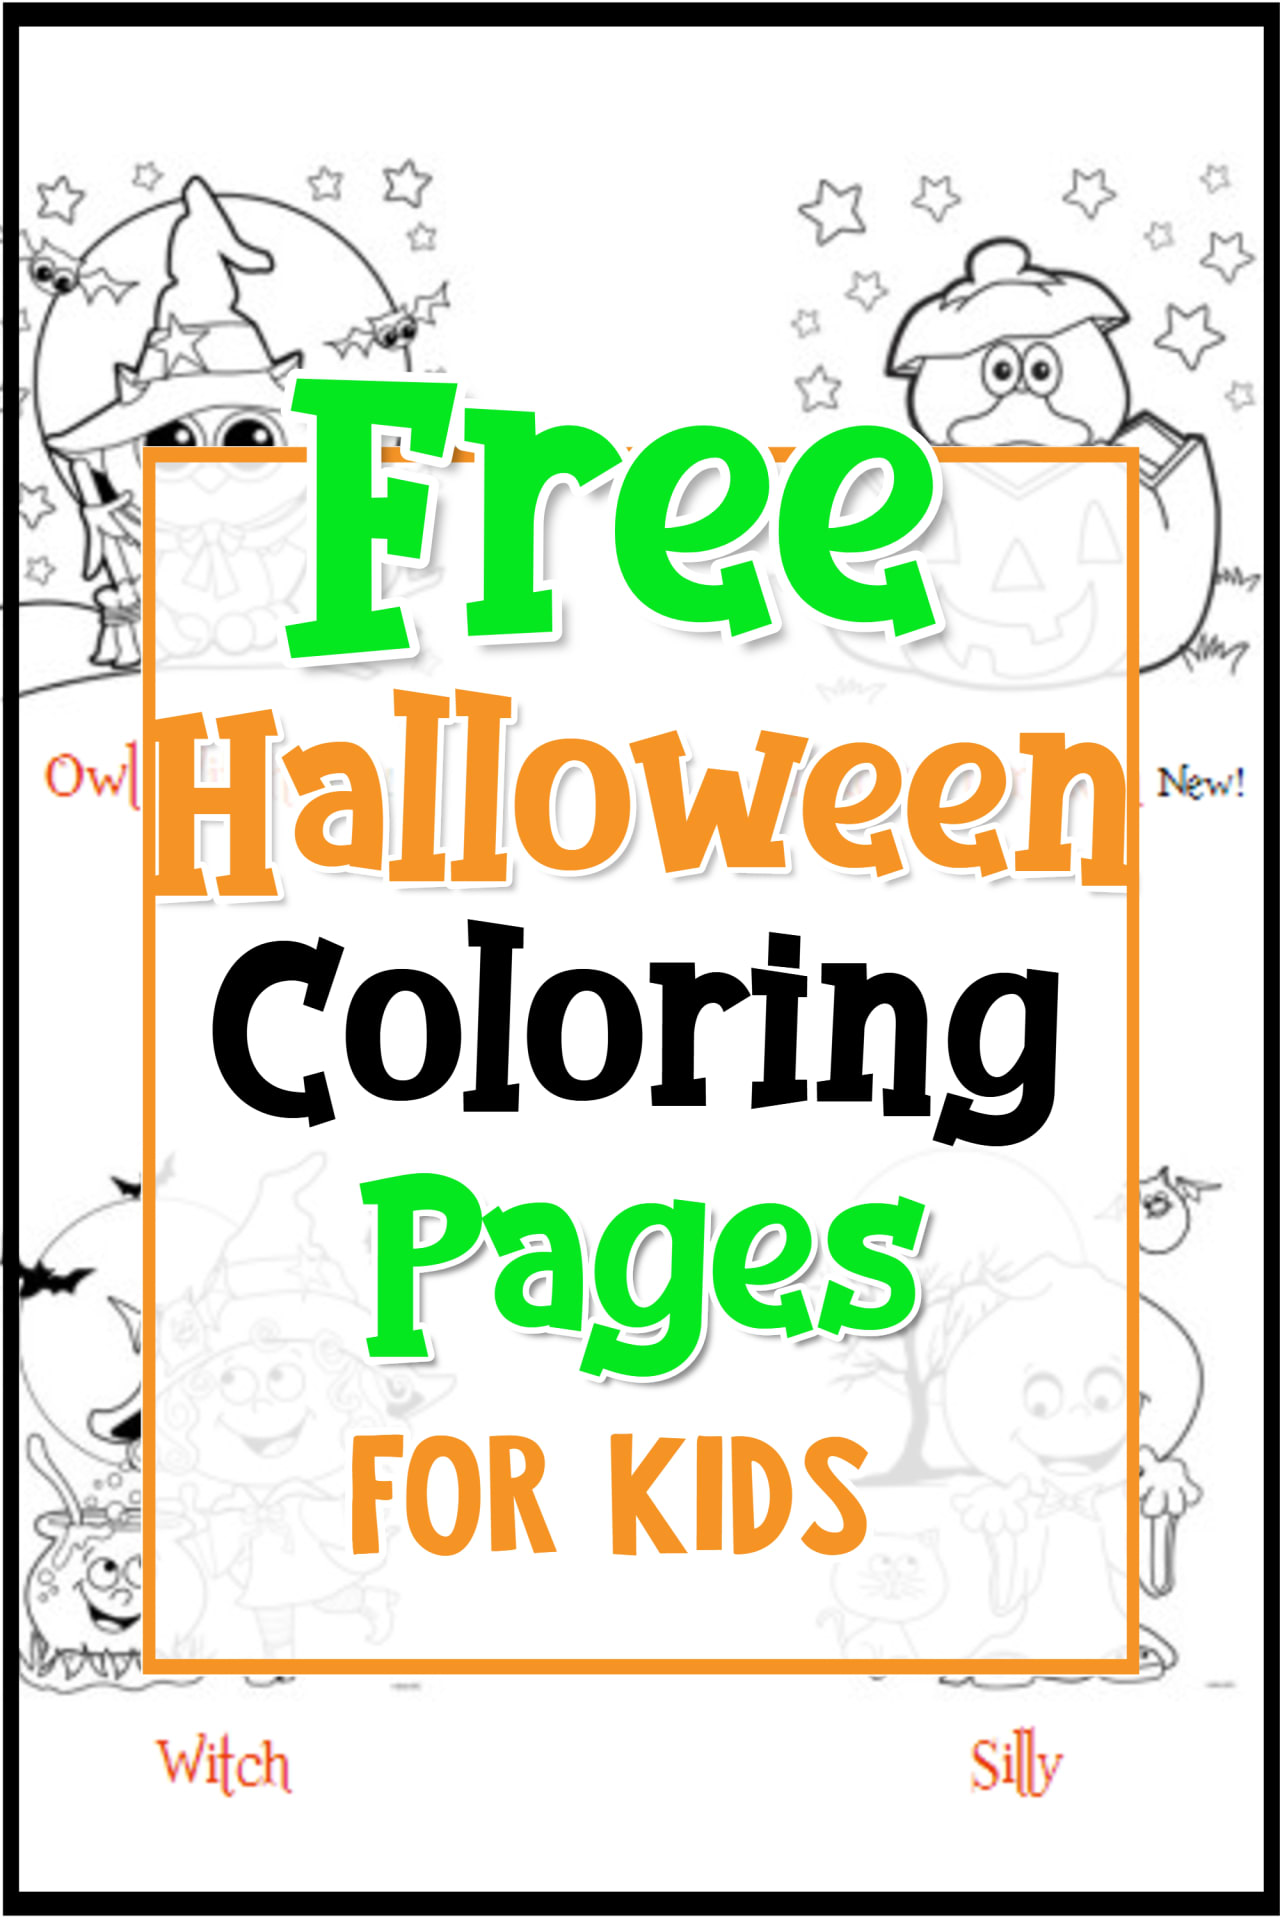 Halloween Printables!  Free Halloween coloring pages for kids - printable coloring pages for kids of all ages and more Halloween crafts for kids and Halloween printables